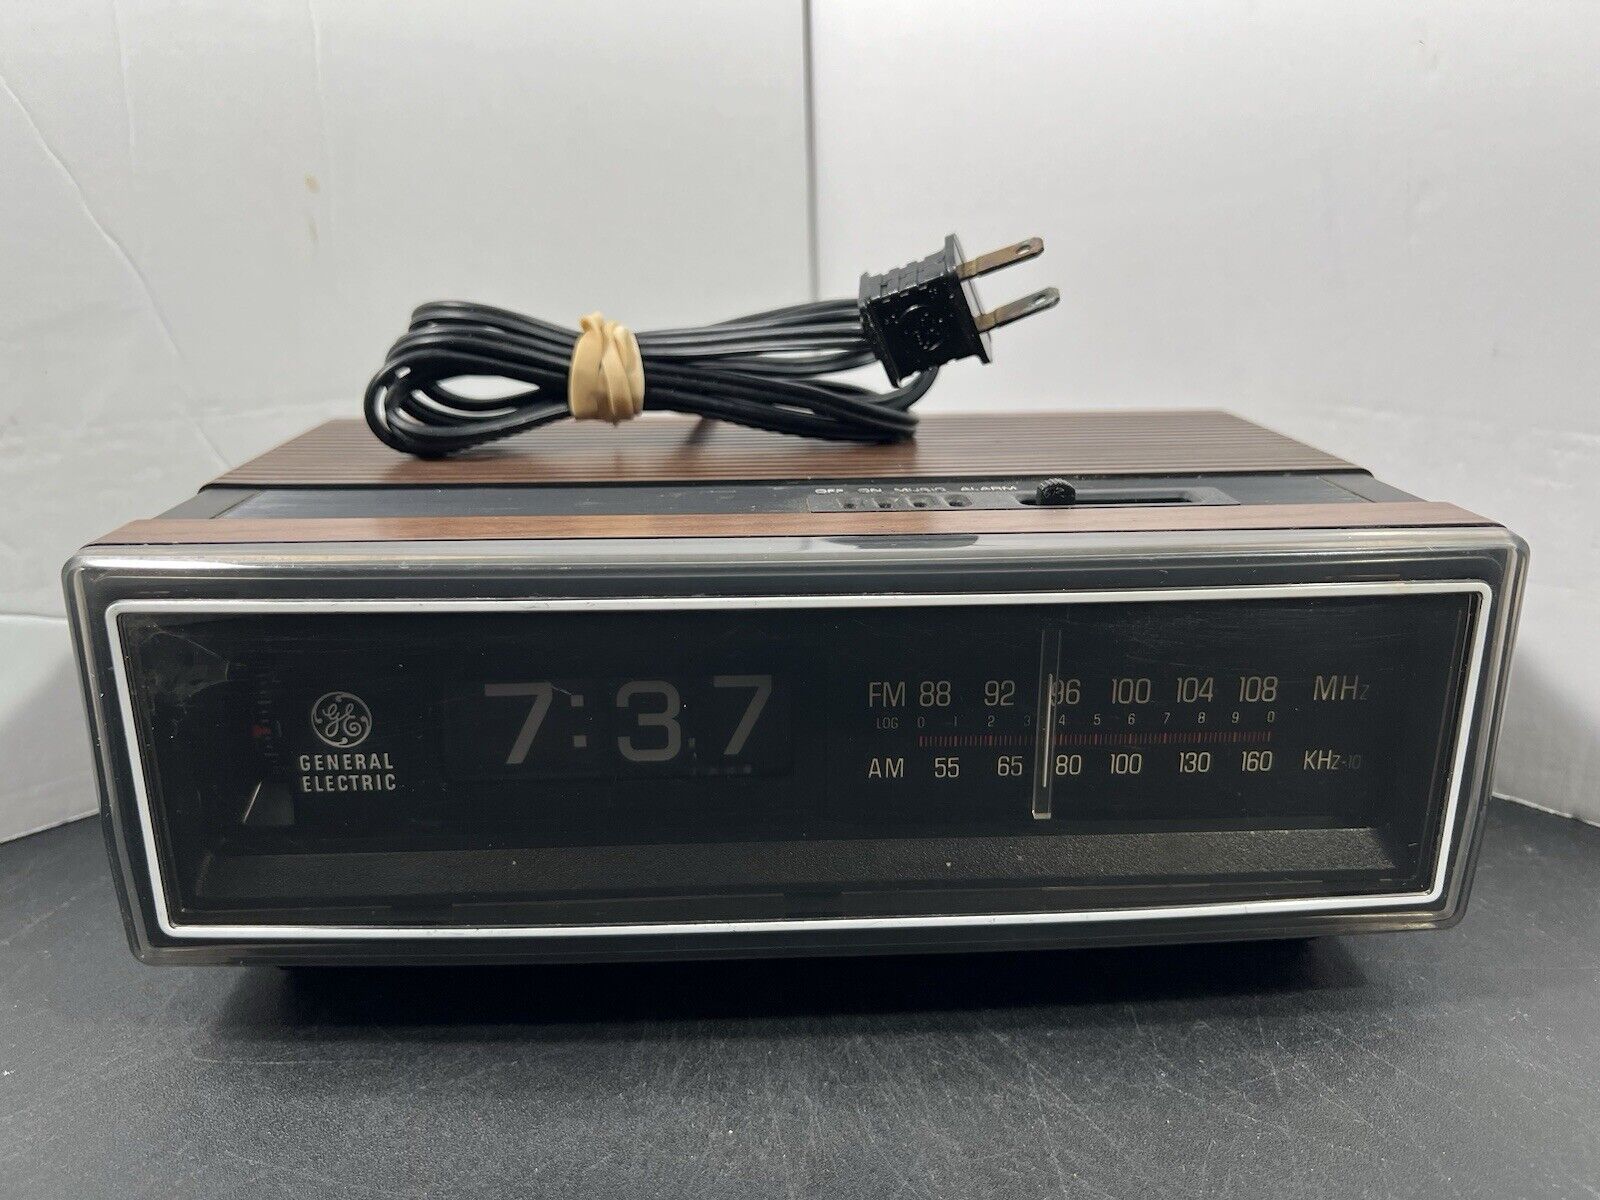 VTG 1984 General Electric GE Walnut Flip Clock Radio Alarm 7-4305C[Tested&Works]